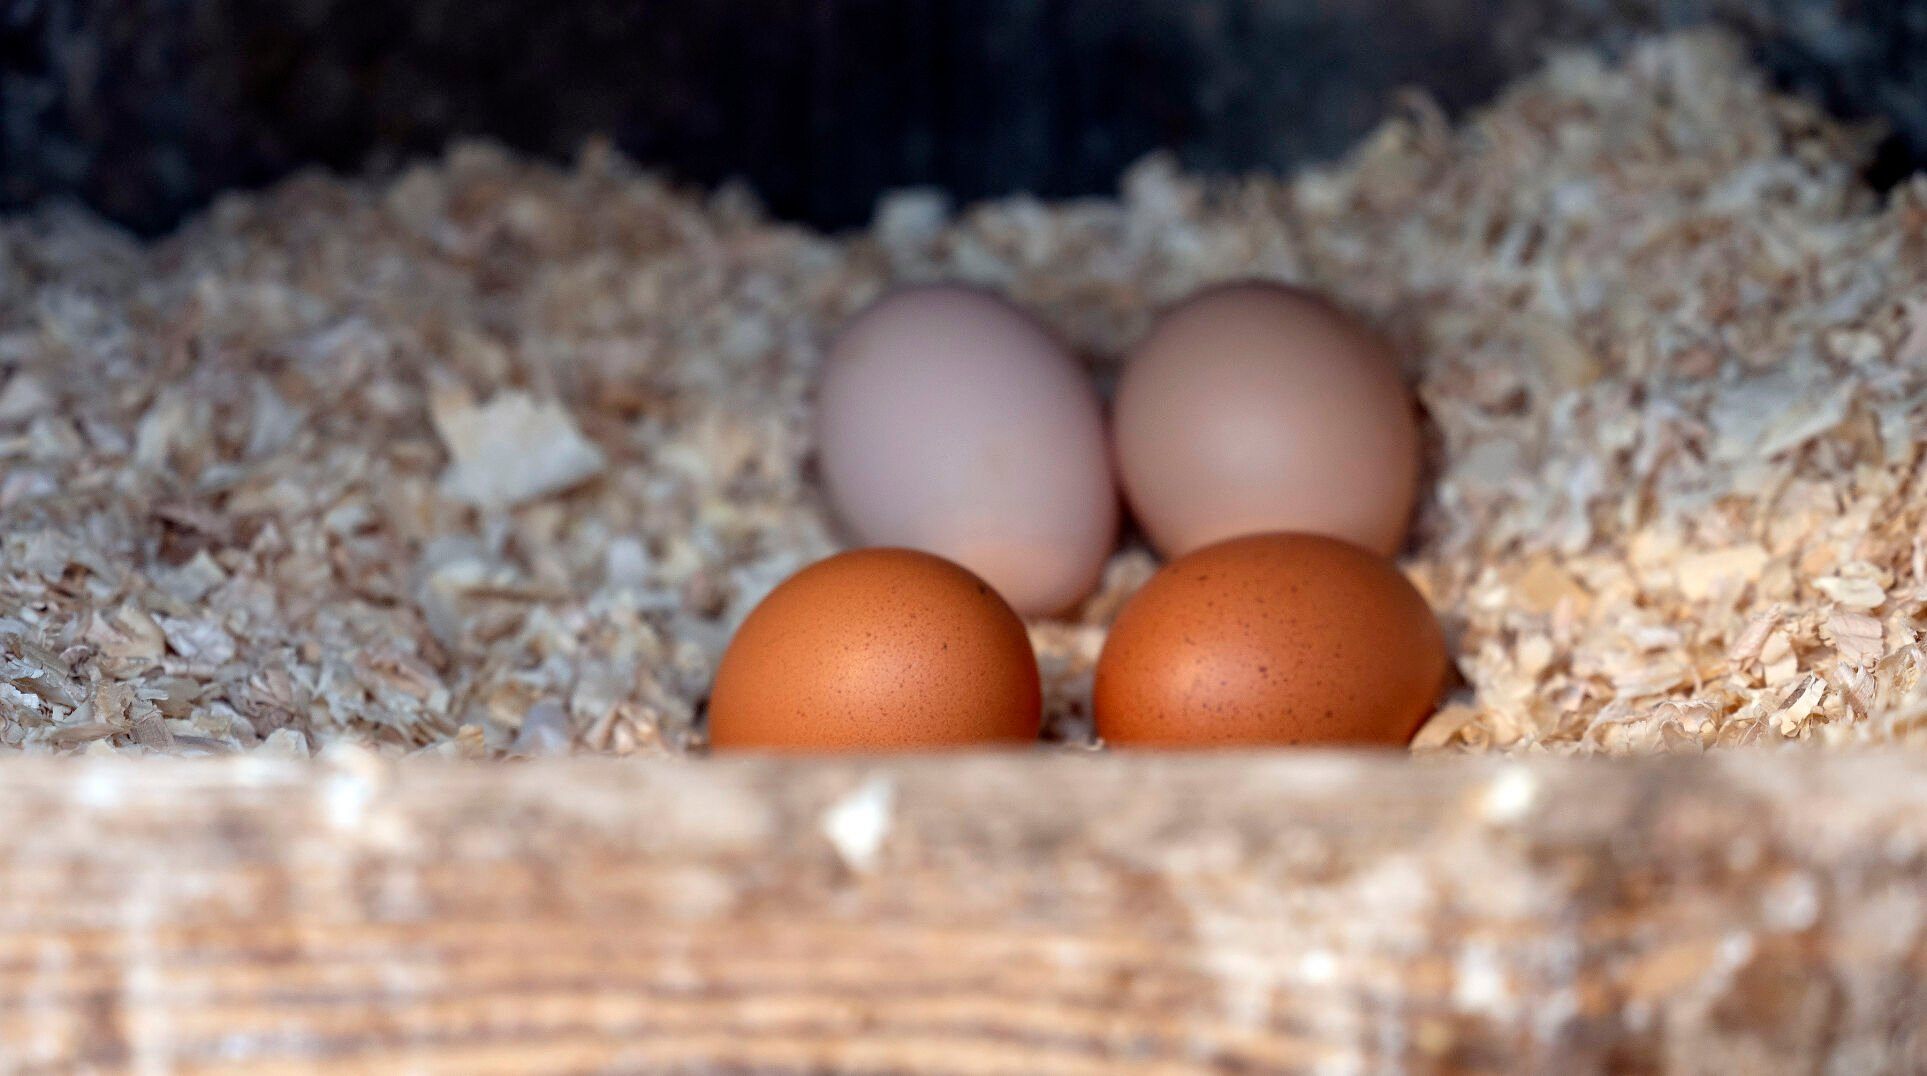 Eggs await collection at Oak Hollow Farm in rural Platteville, Wis., on Friday, Feb. 17, 2023.    PHOTO CREDIT: Stephen Gassman
Telegraph Herald